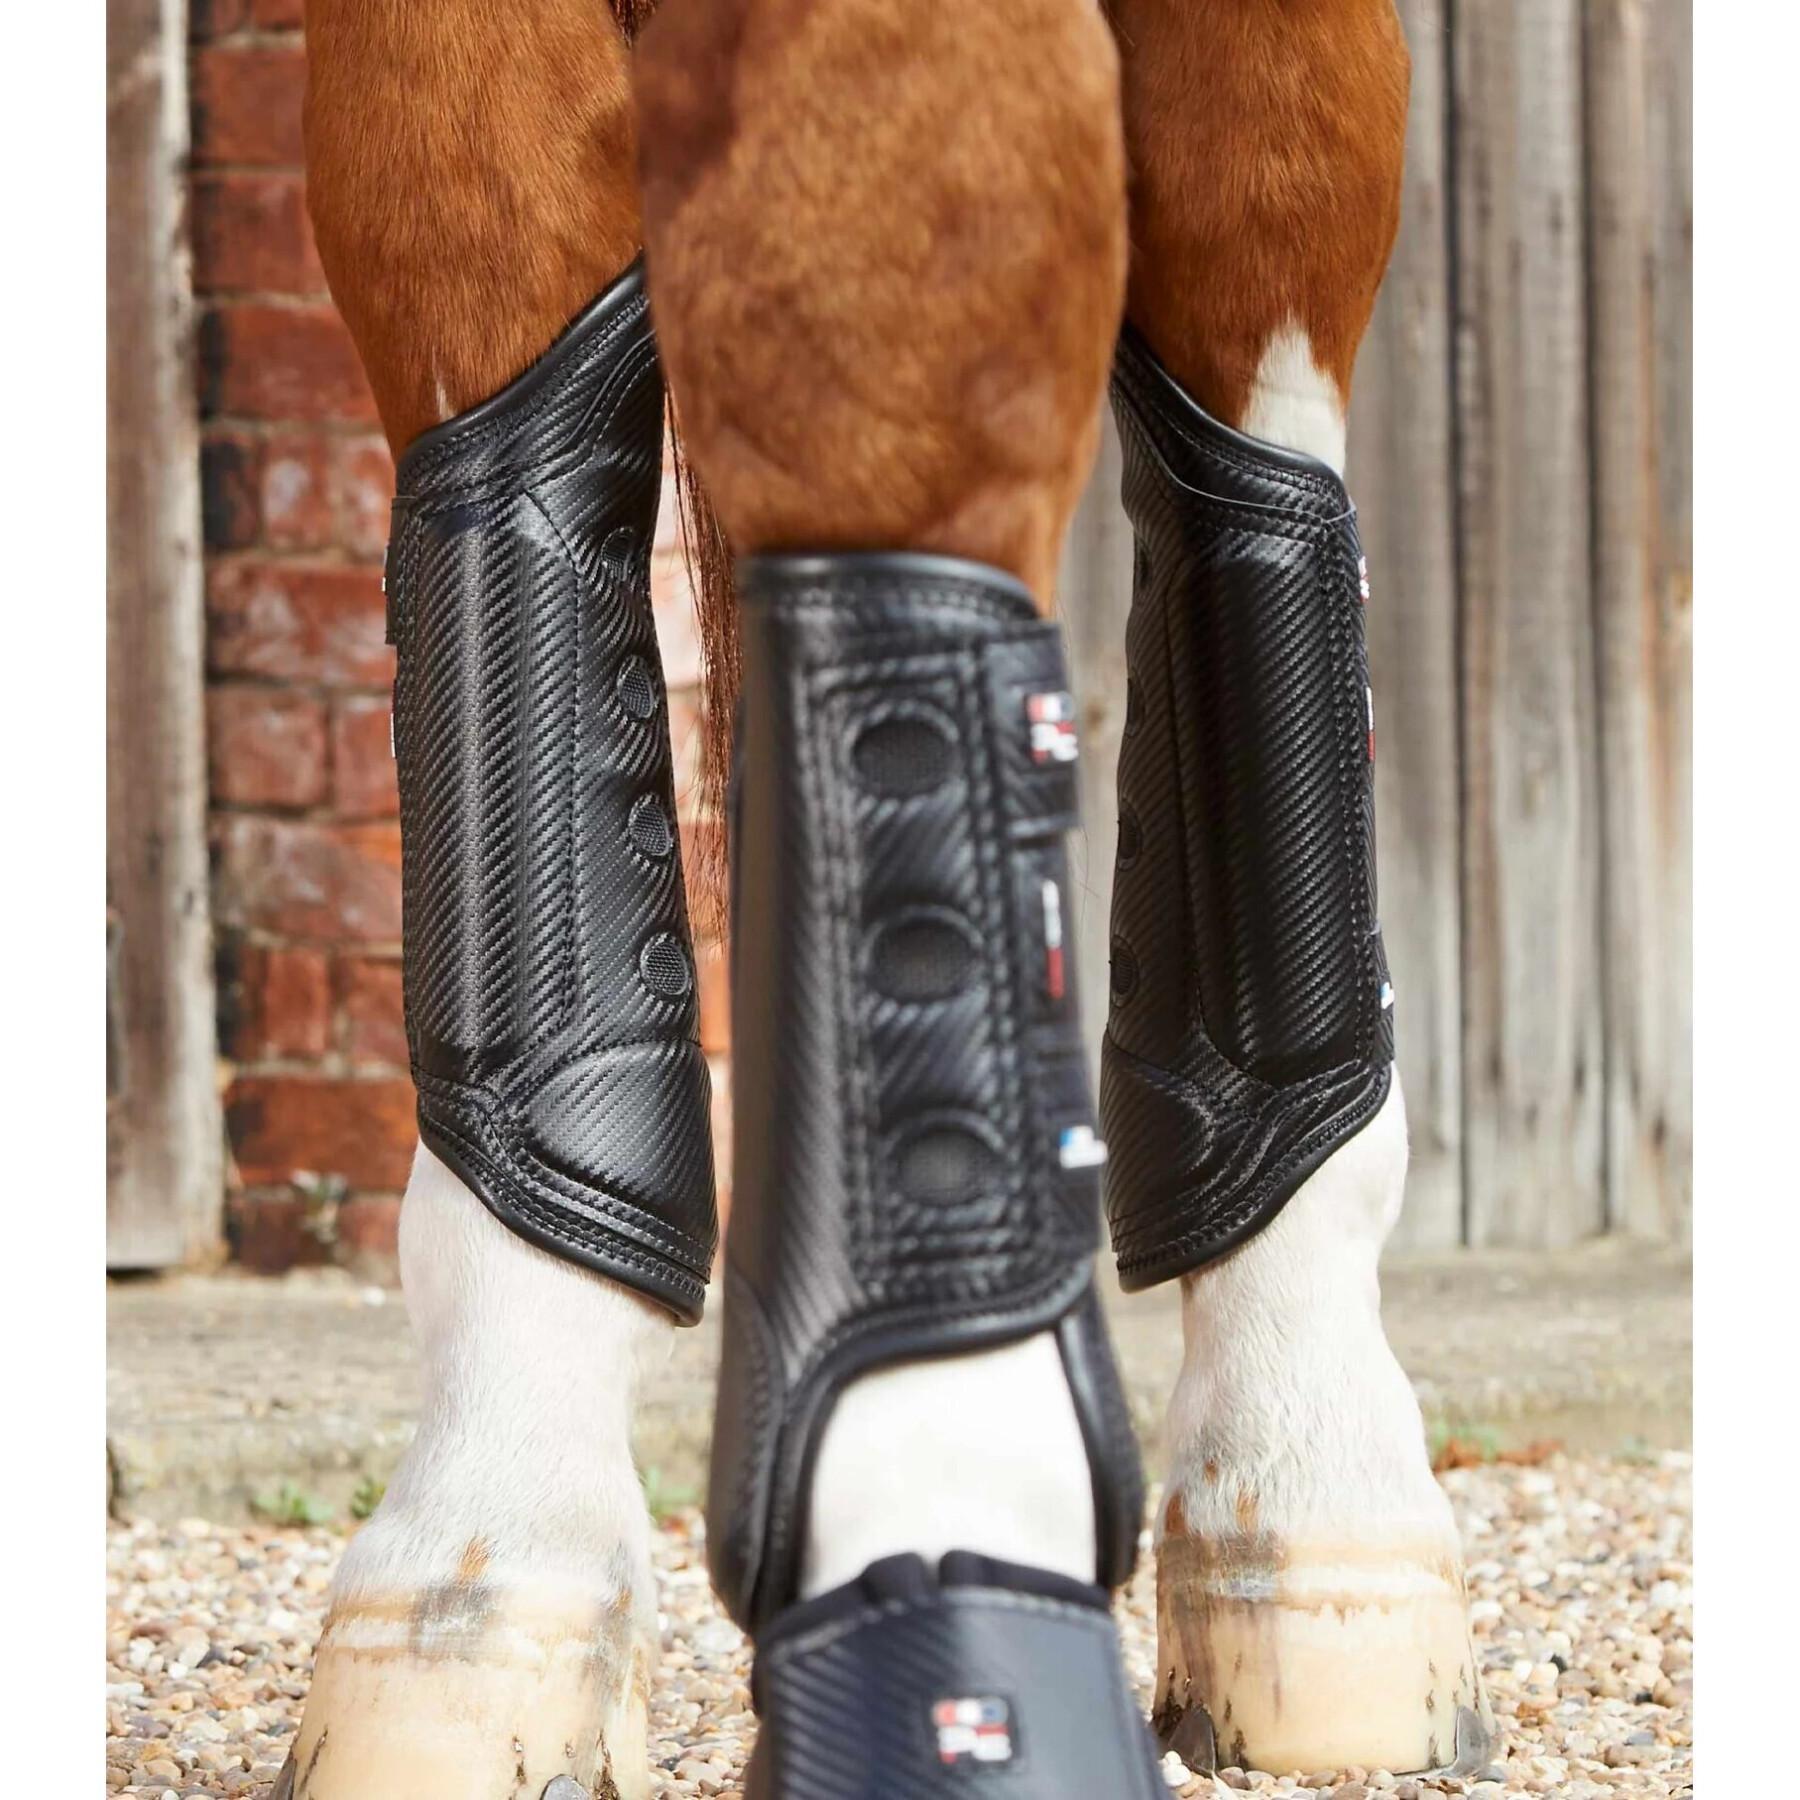 Botas de patas traseiras para cavalos Premier Equine Carbon Tech Air Cooled